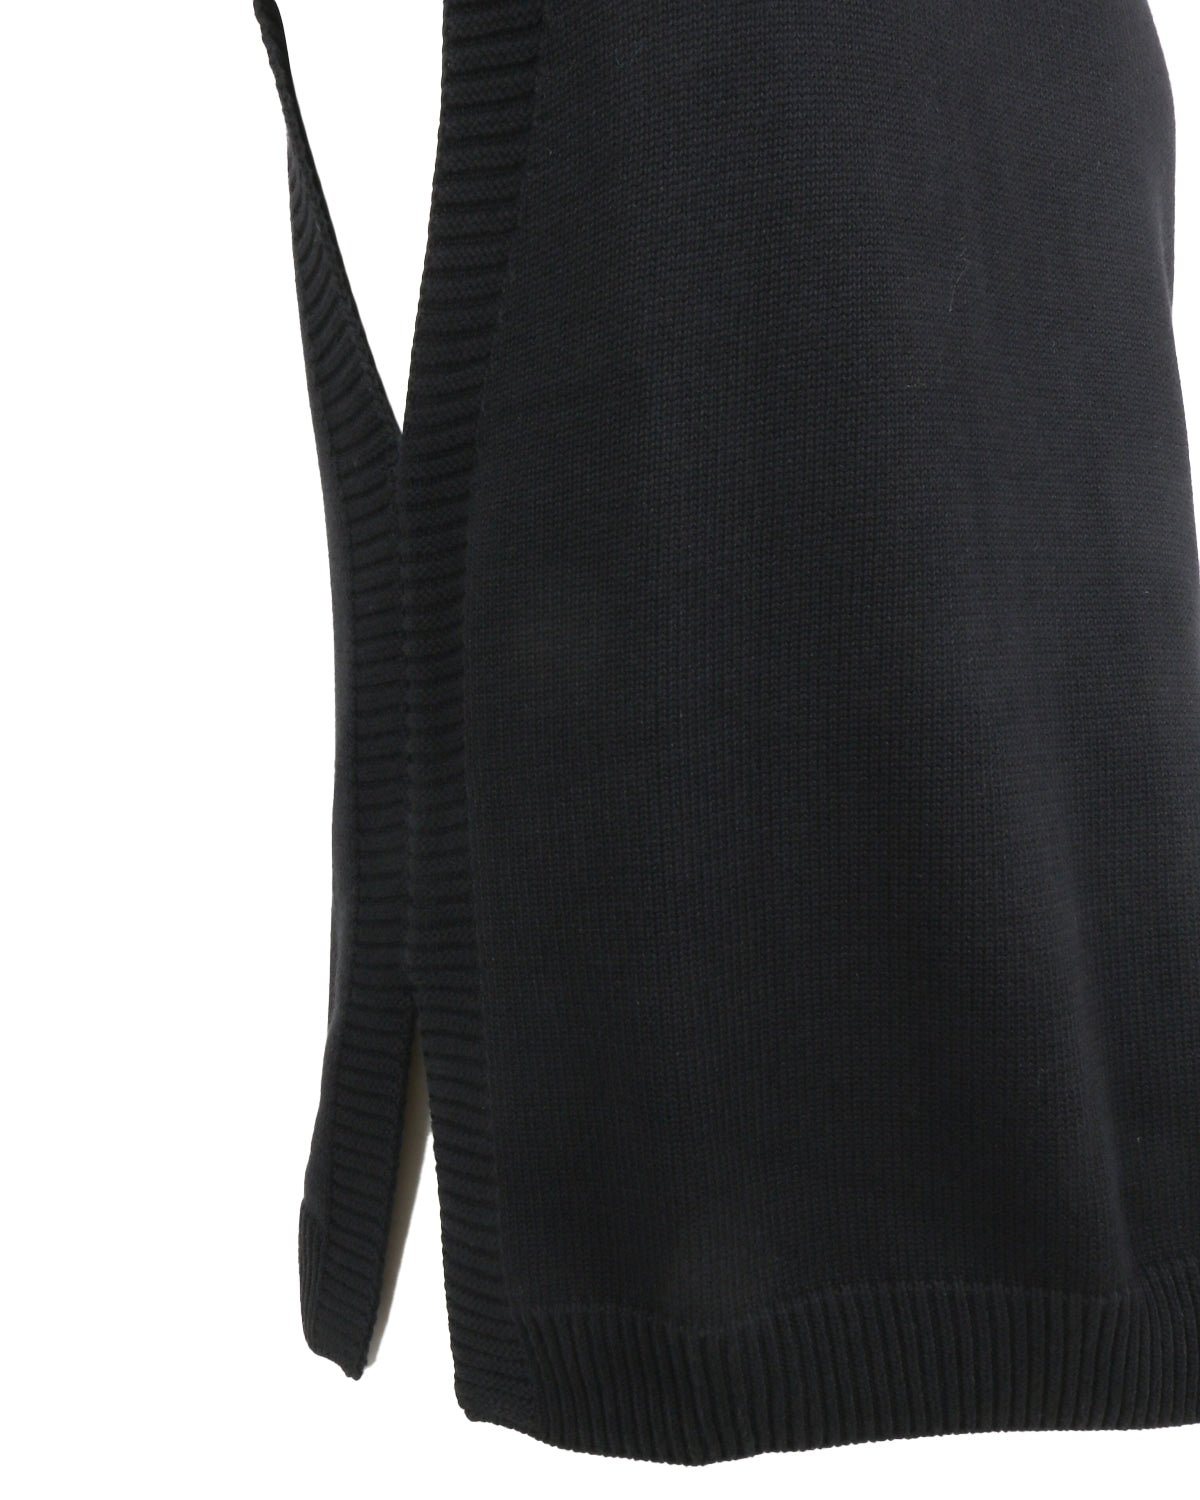 Sea Vest Knit, black